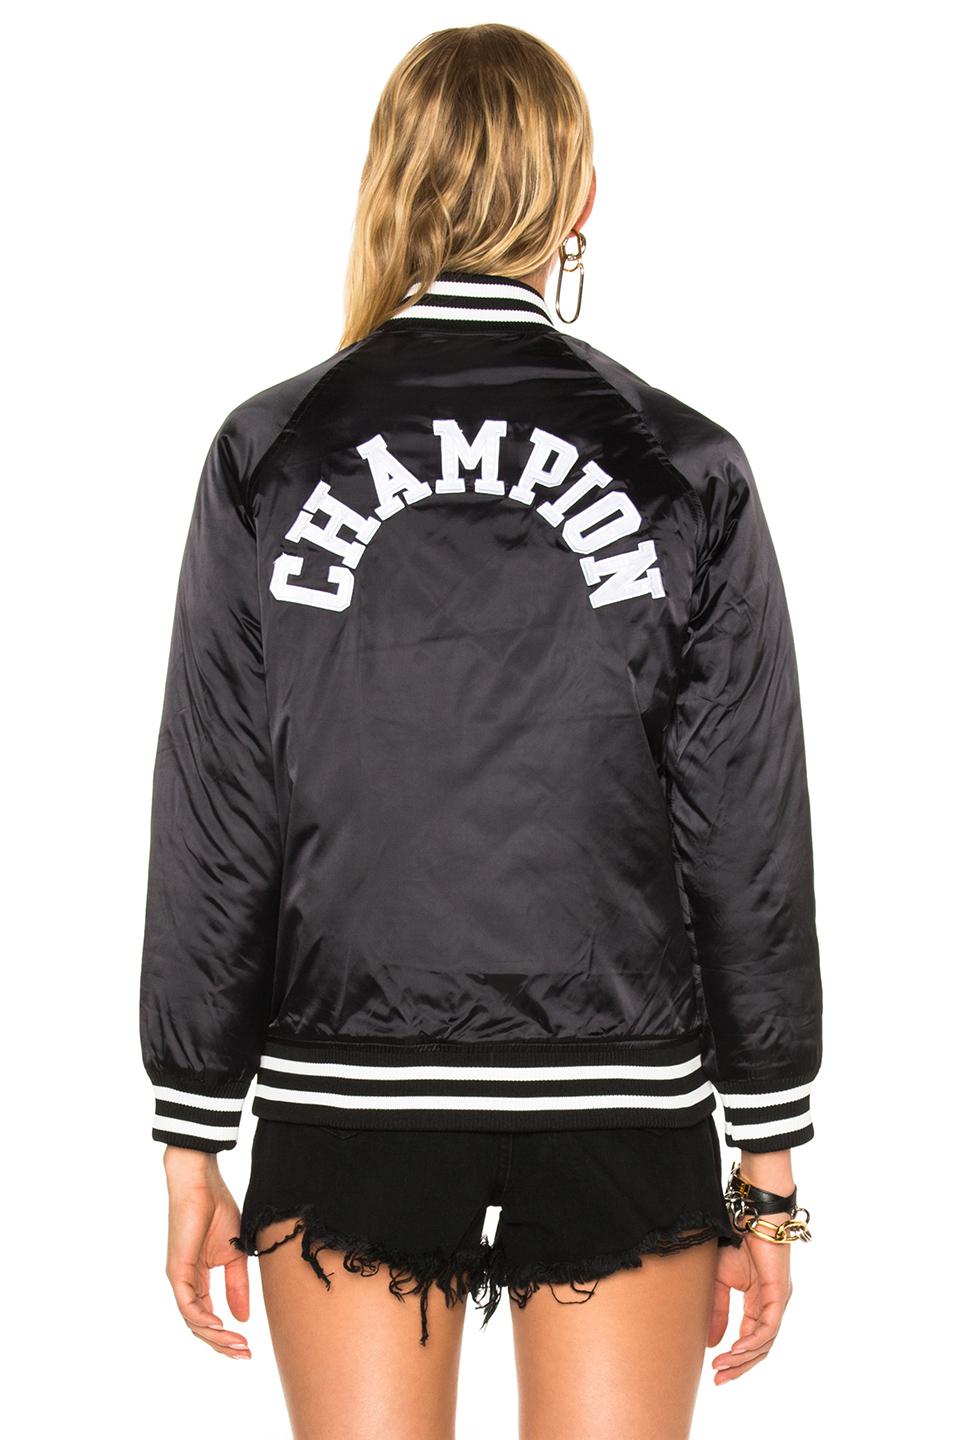 champion bomber jacket black